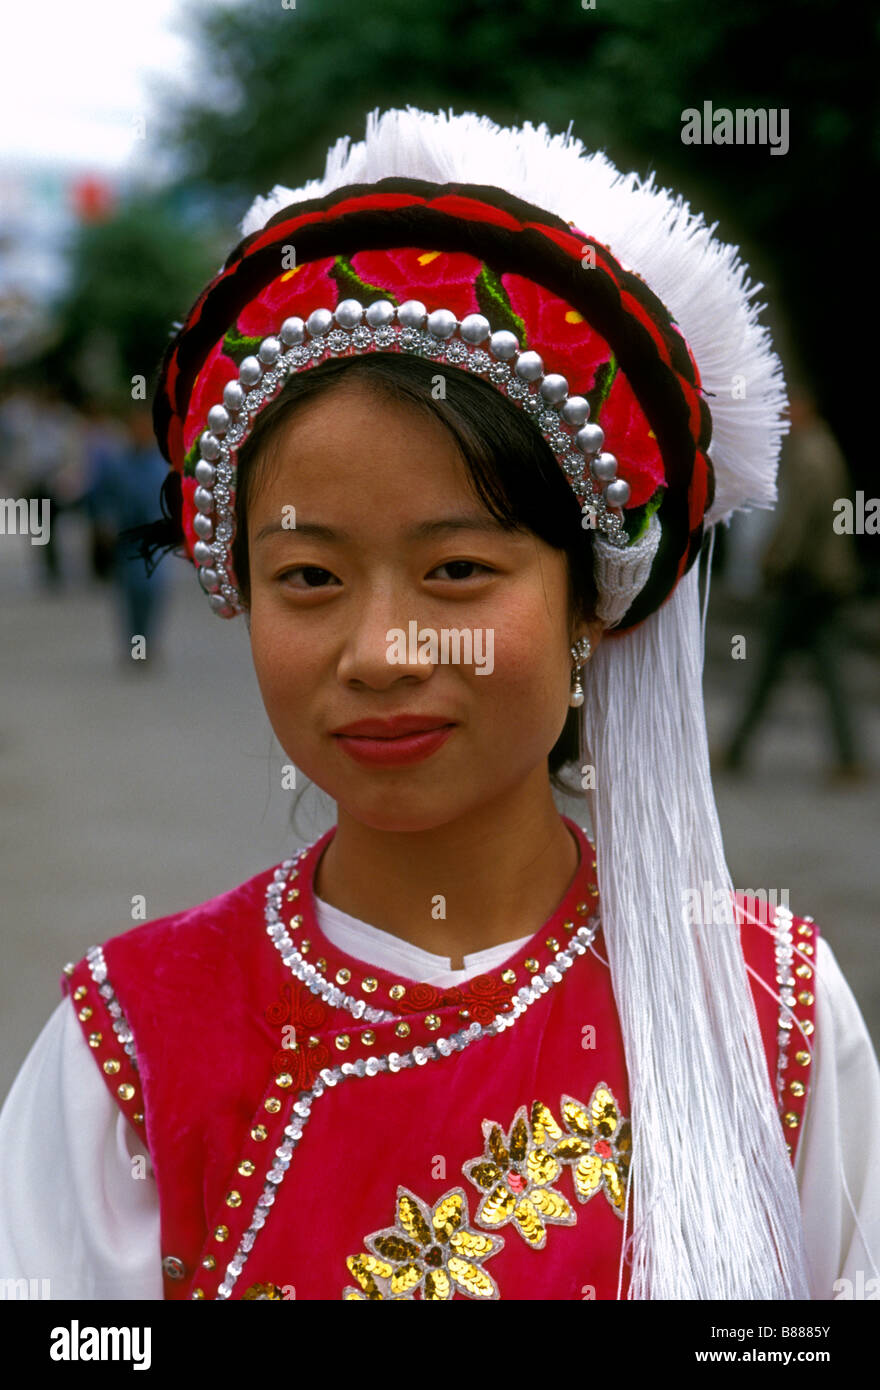 1, one, Chinese woman, Bai woman, Bai people, Bai ethnicity, ethnic ...